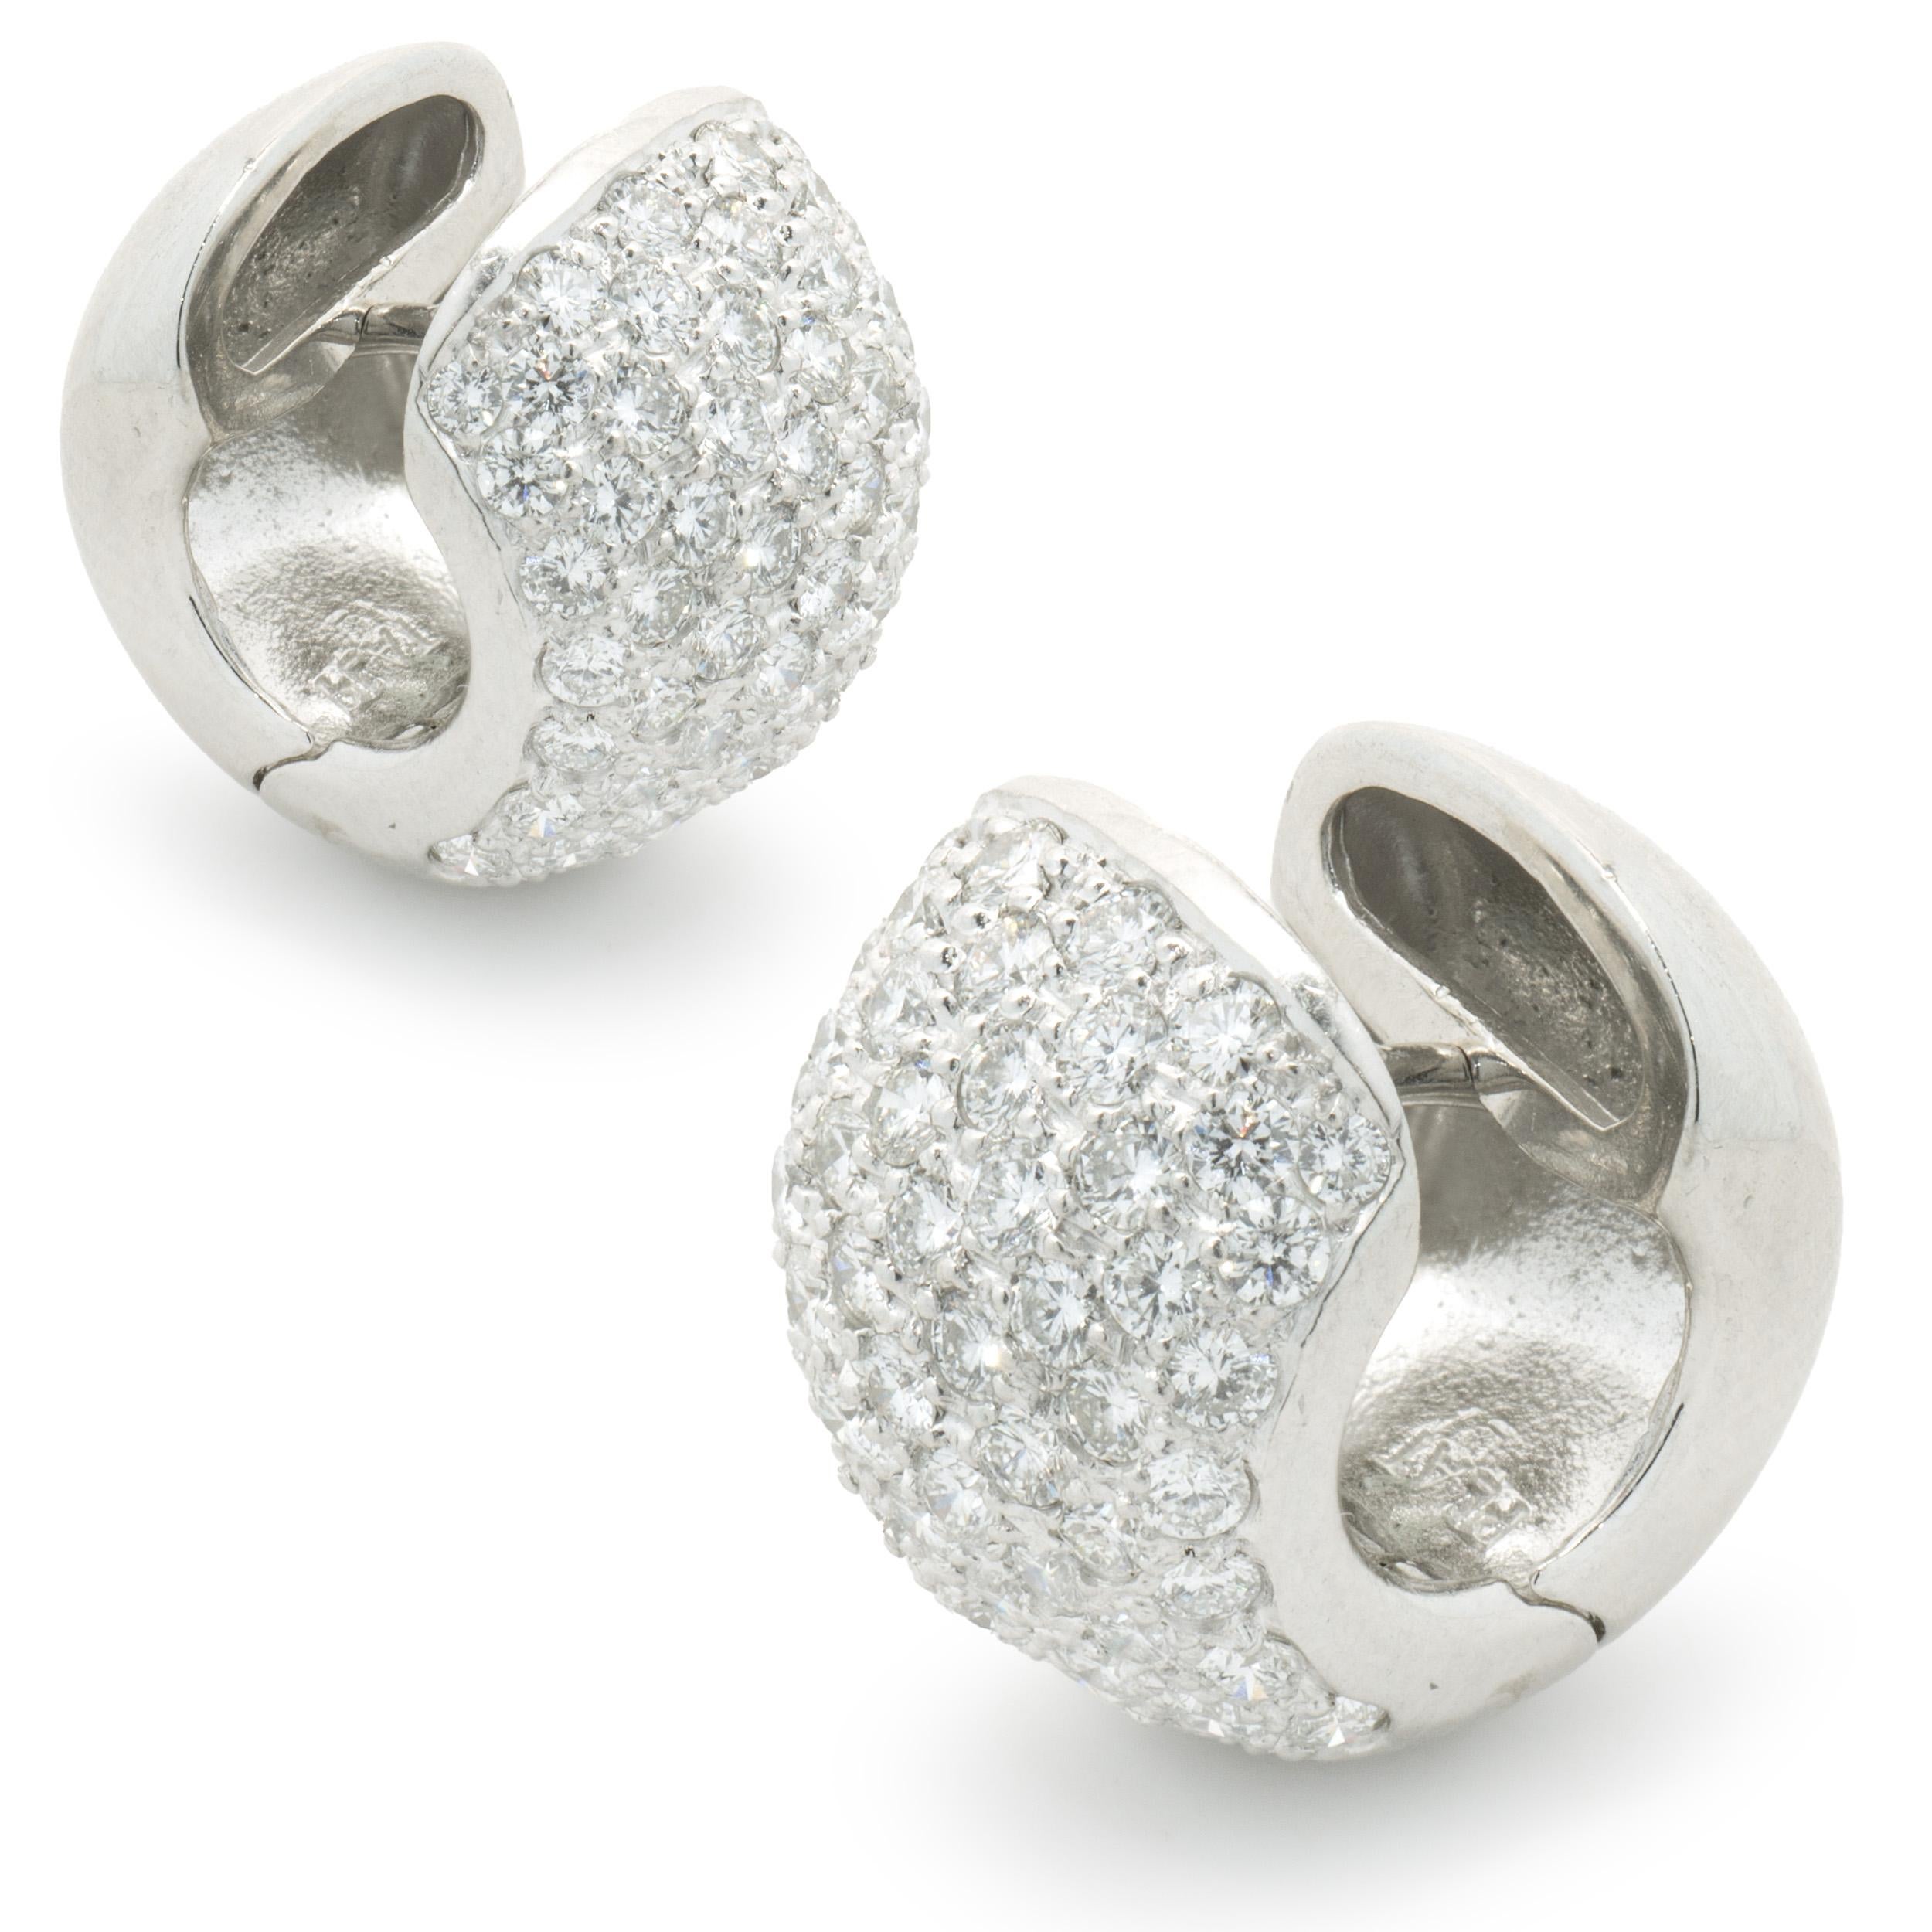 Designer: Custom
Material: platinum
Diamond: 118 round brilliant cut = 2.39cttw
Color: G
Clarity: VS1-2
Dimensions: earrings measure 16mm long
Weight: 15.56 grams
